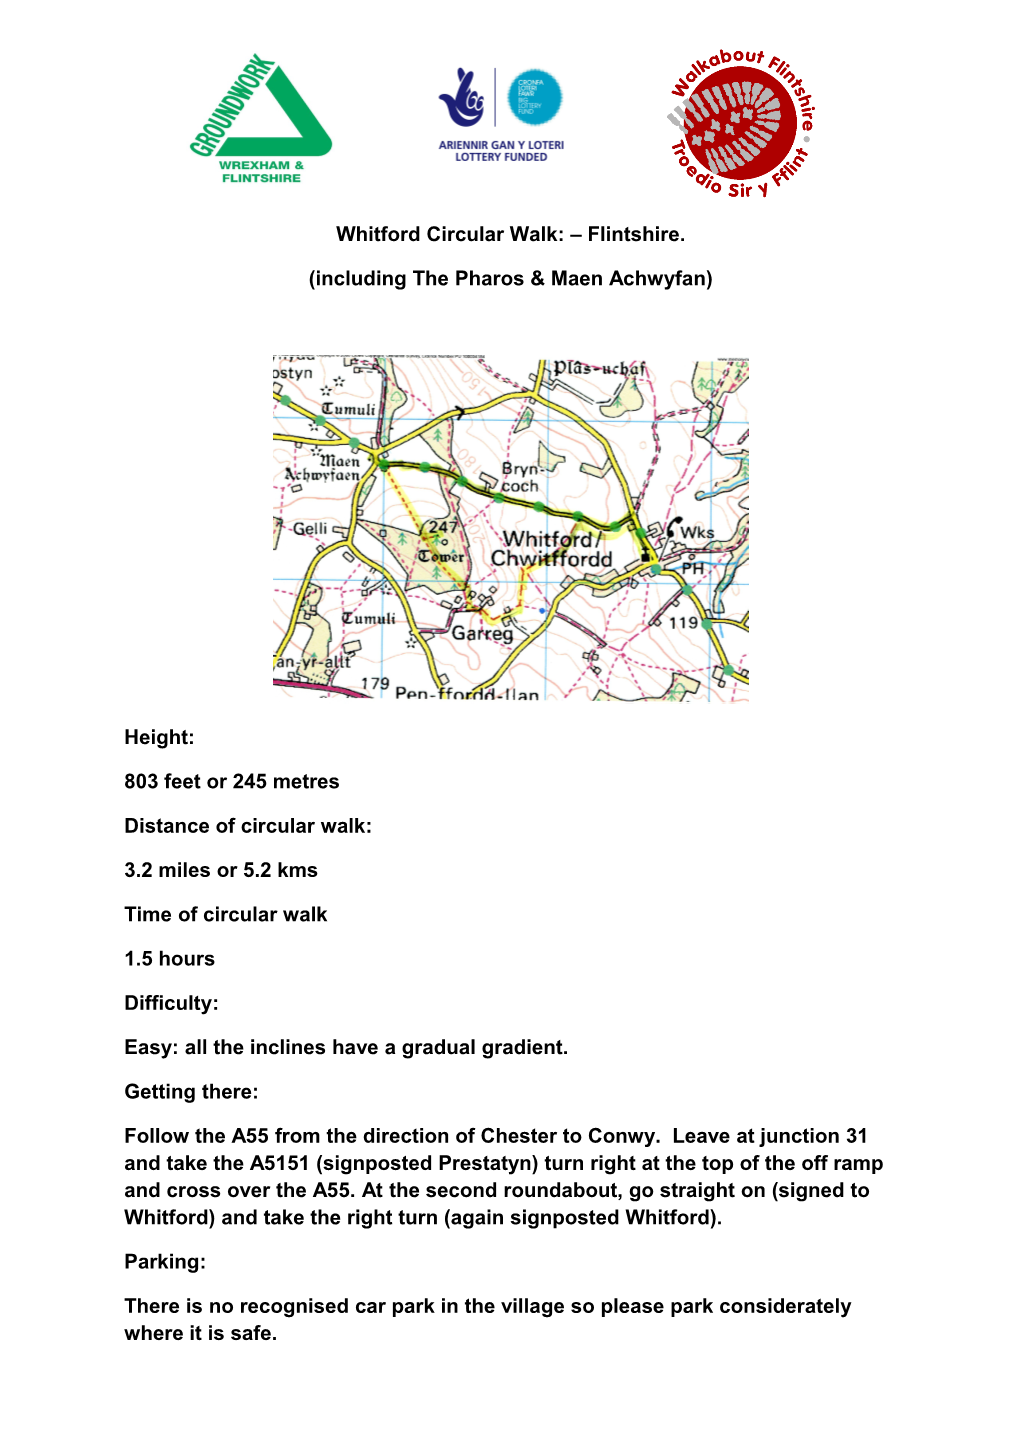 Whitford Circular Walk: Flintshire